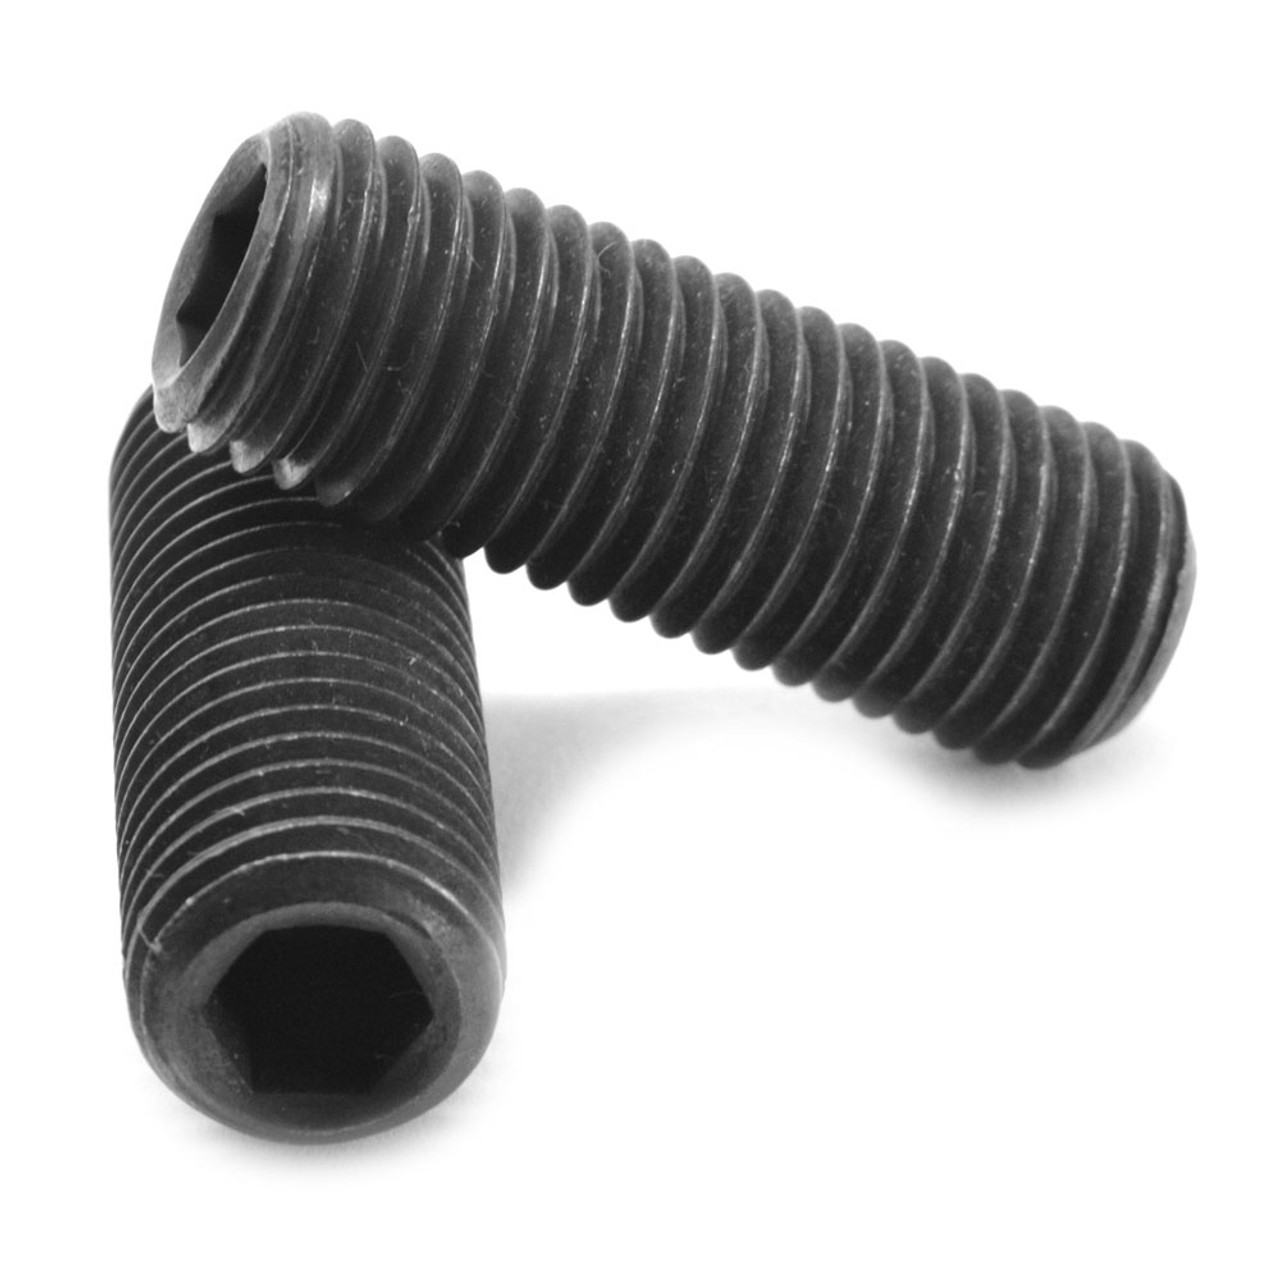 1"-8 x 2 3/4" Coarse Thread Socket Set Screw Cup Point Alloy Steel Black Oxide